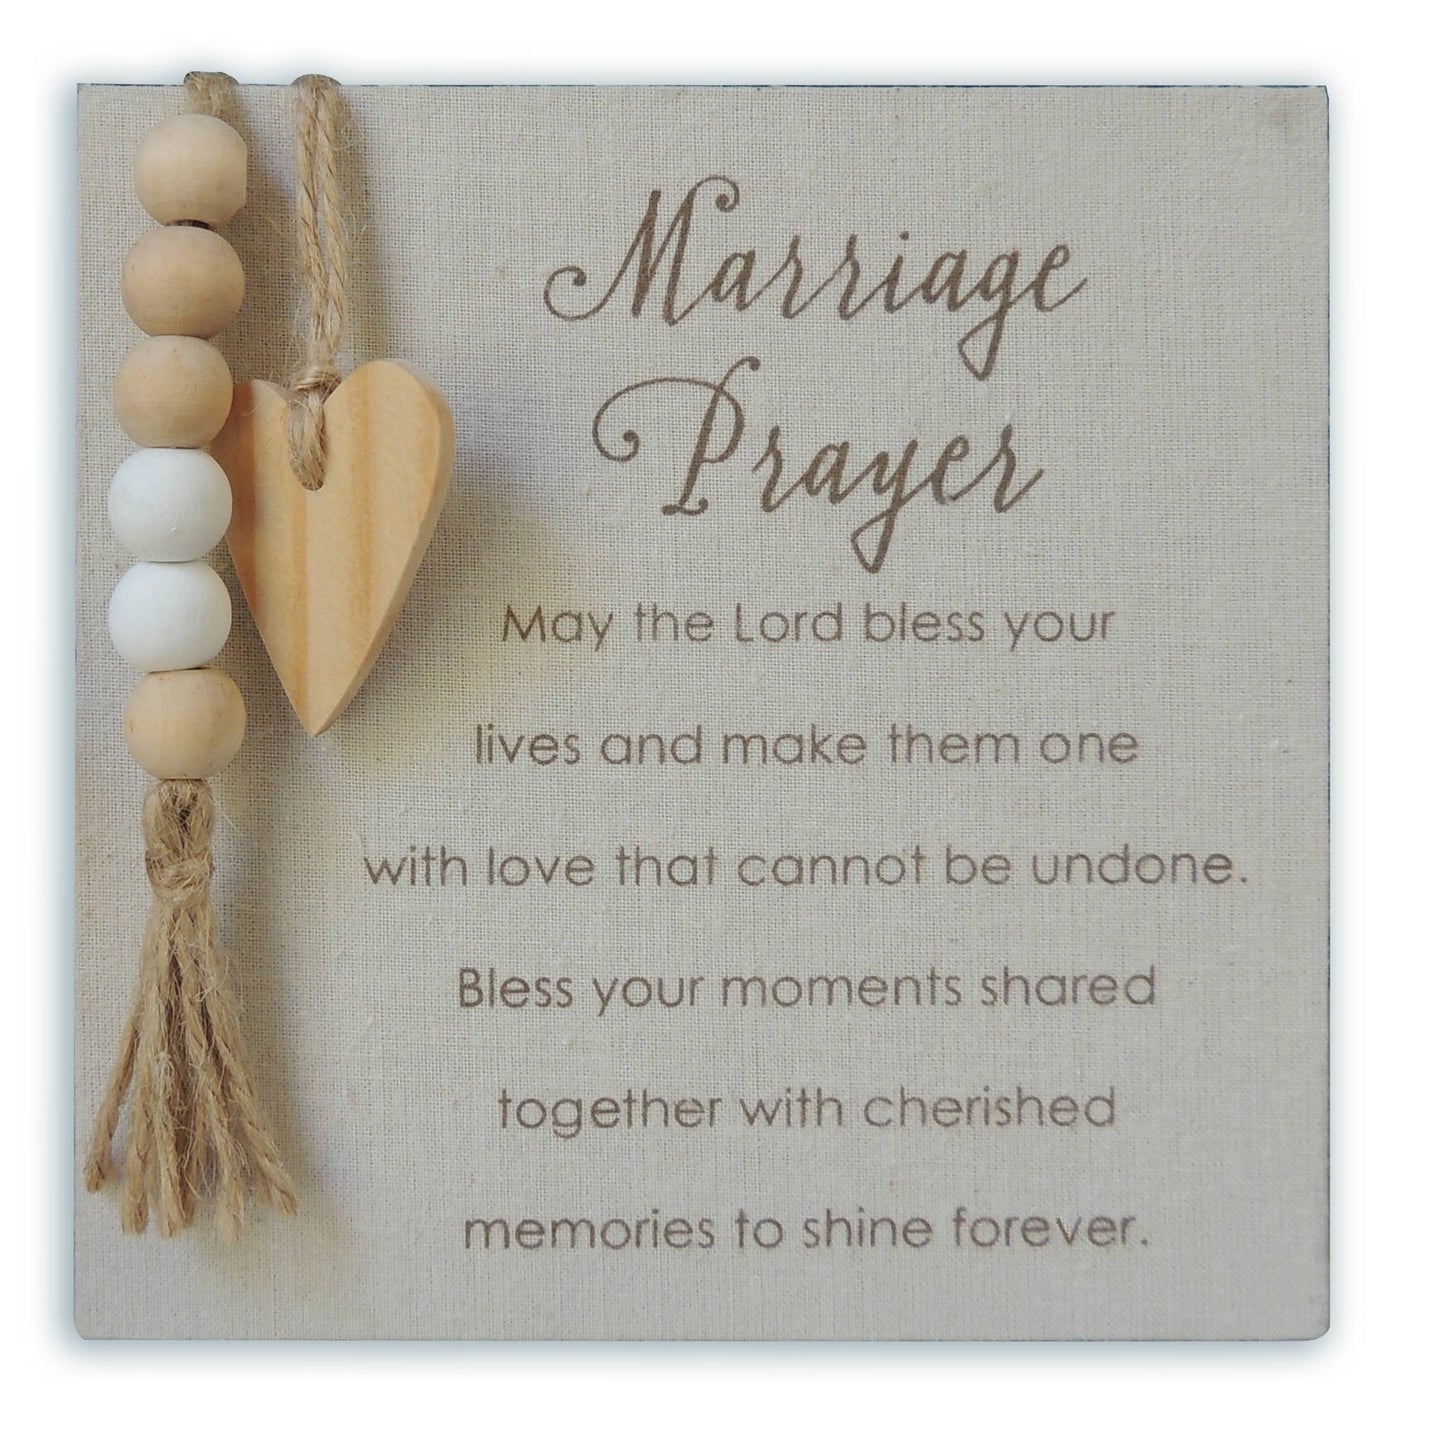 Marriage Prayer Plaque